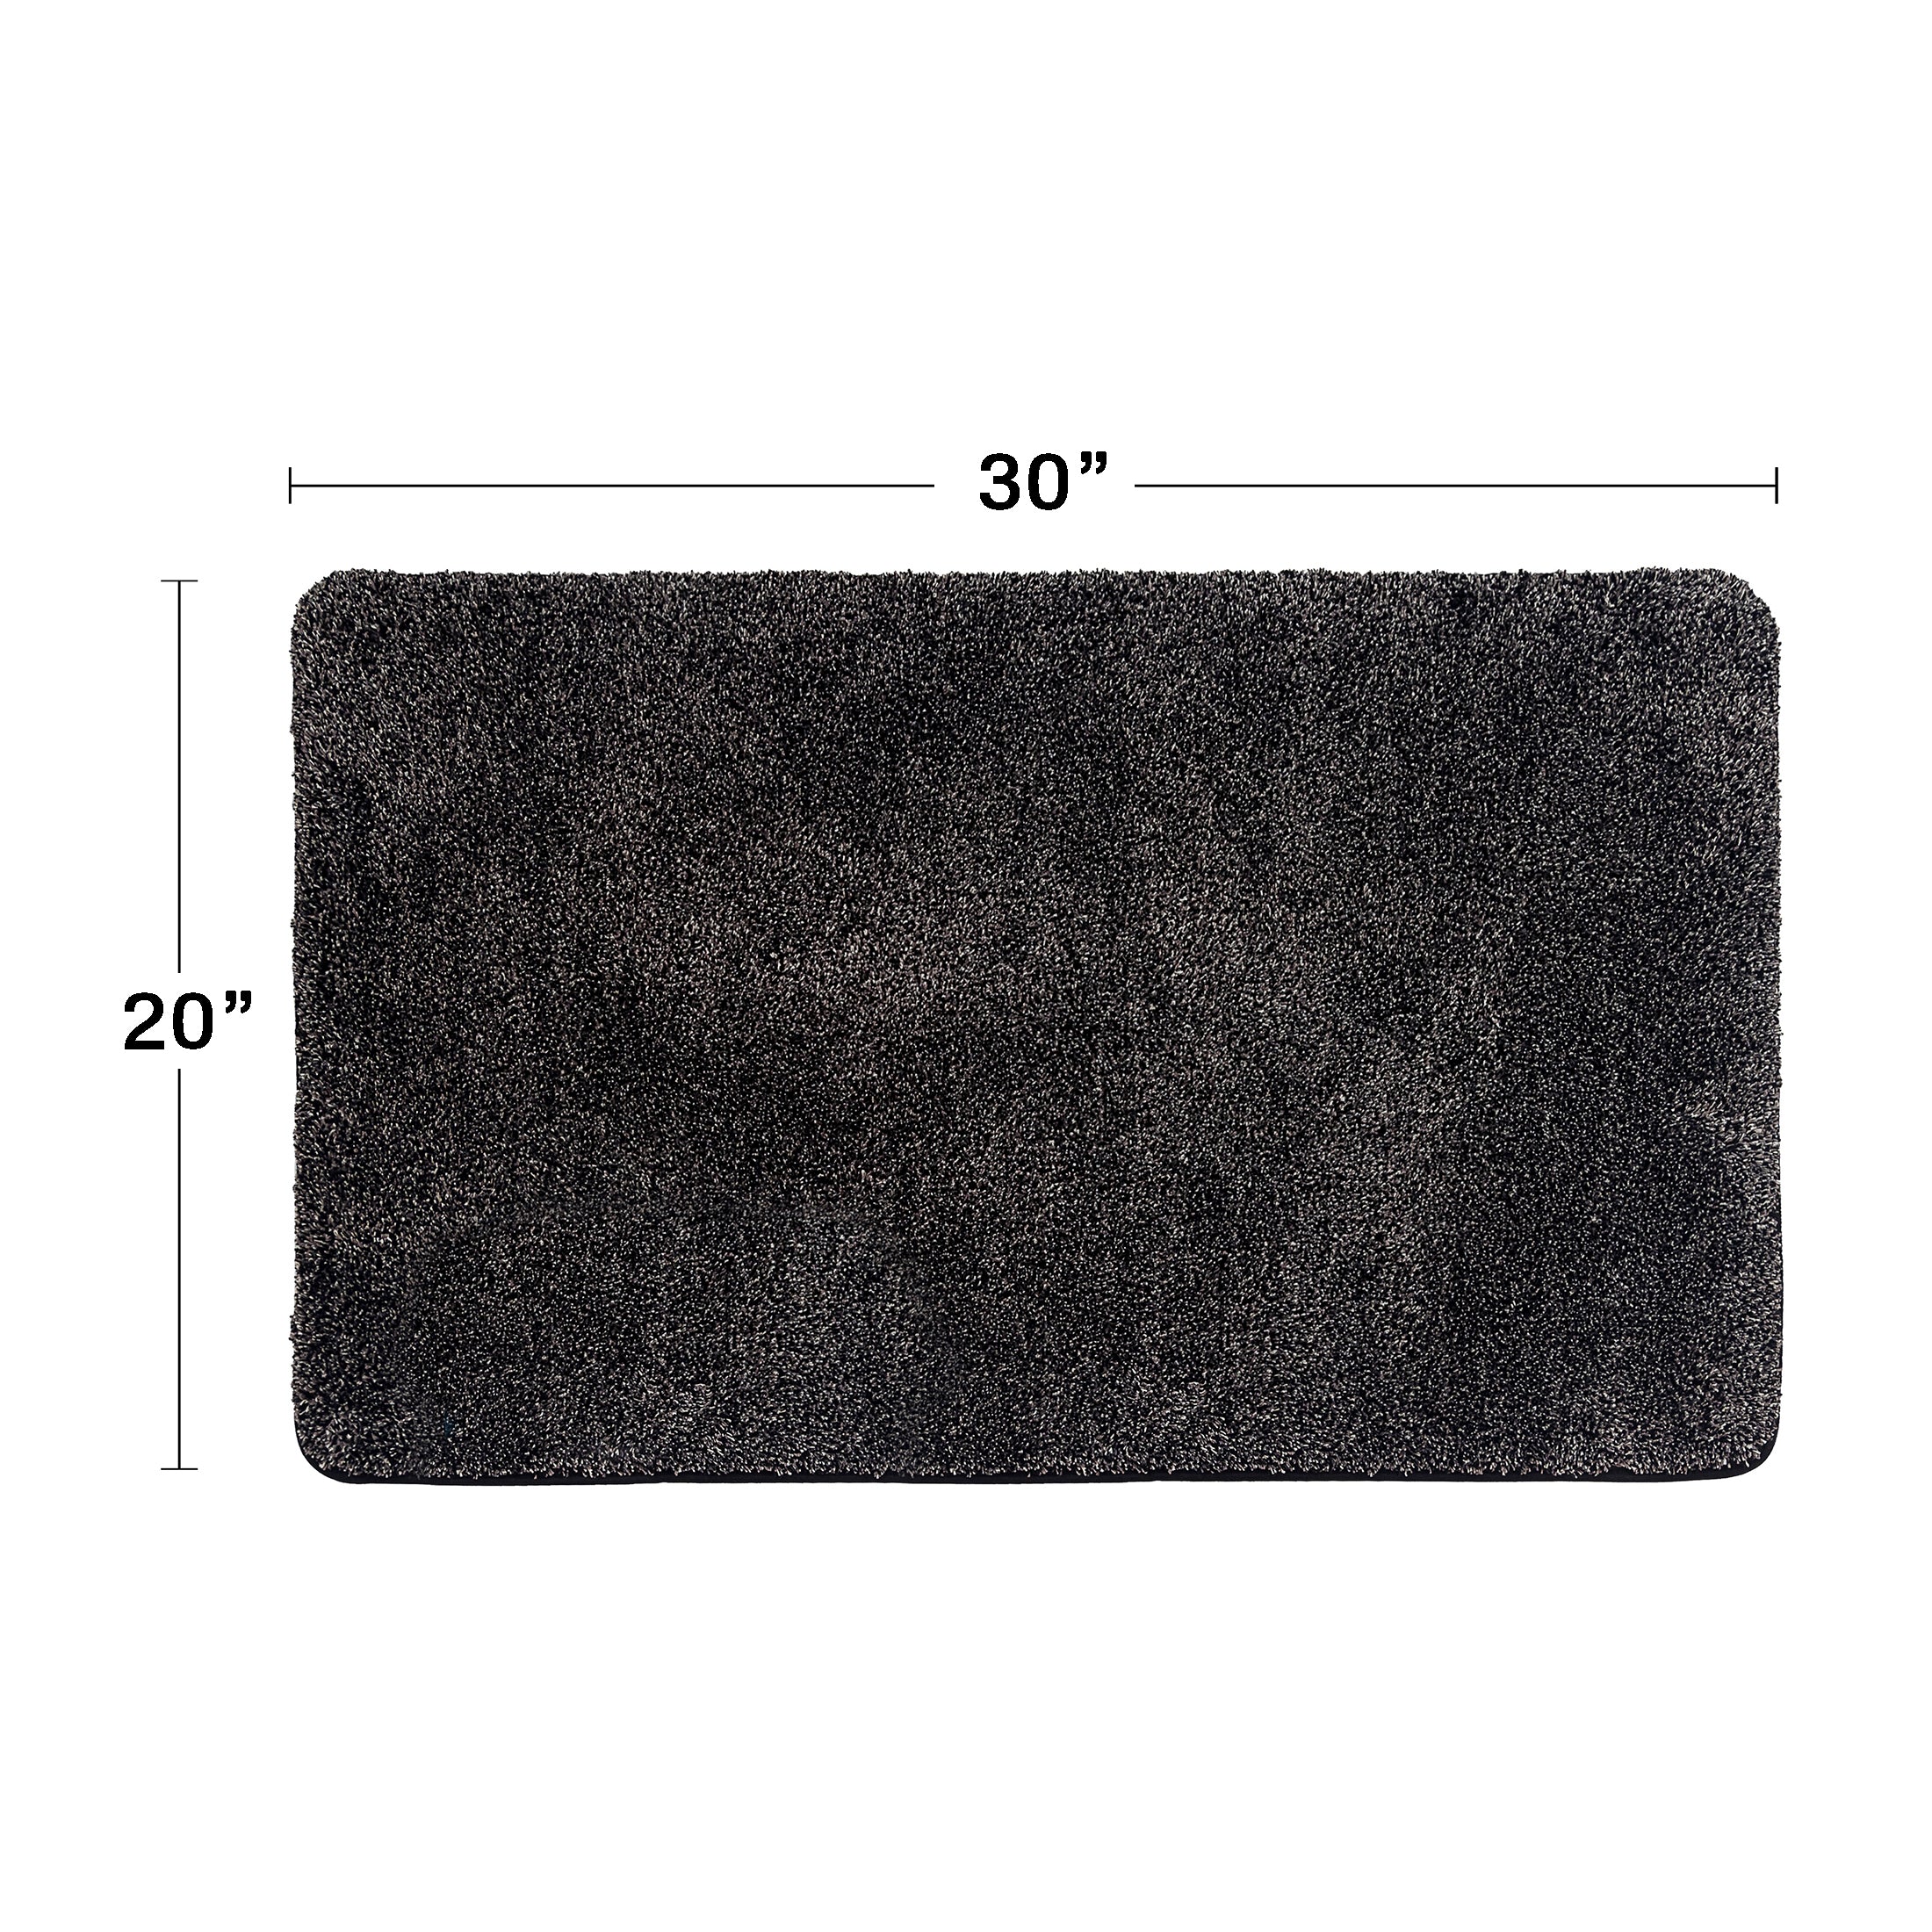 Eurow Trek N' Clean Microfiber Traction Floor Mat, Black and Gray, 20